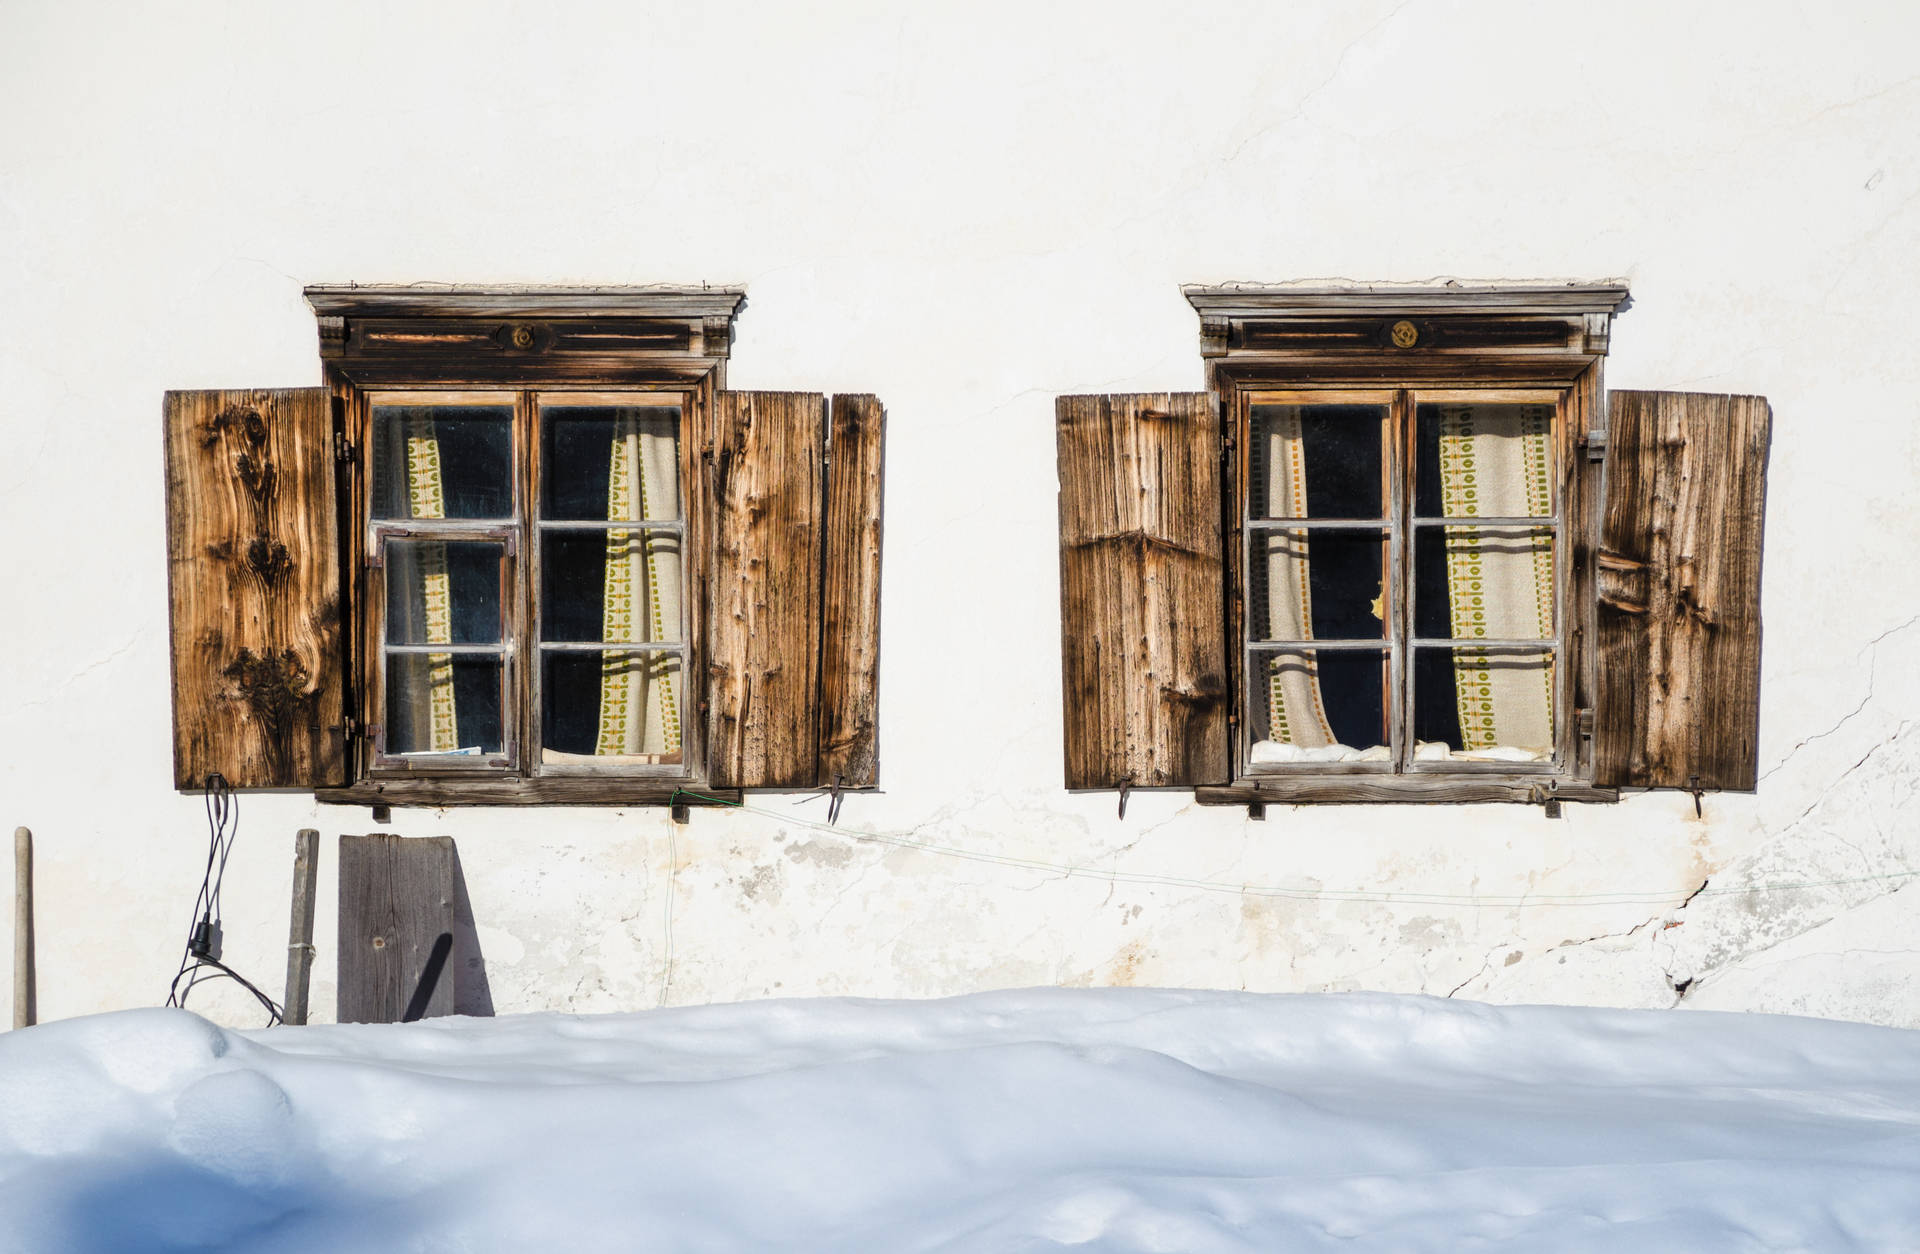 Wooden Windows Winter